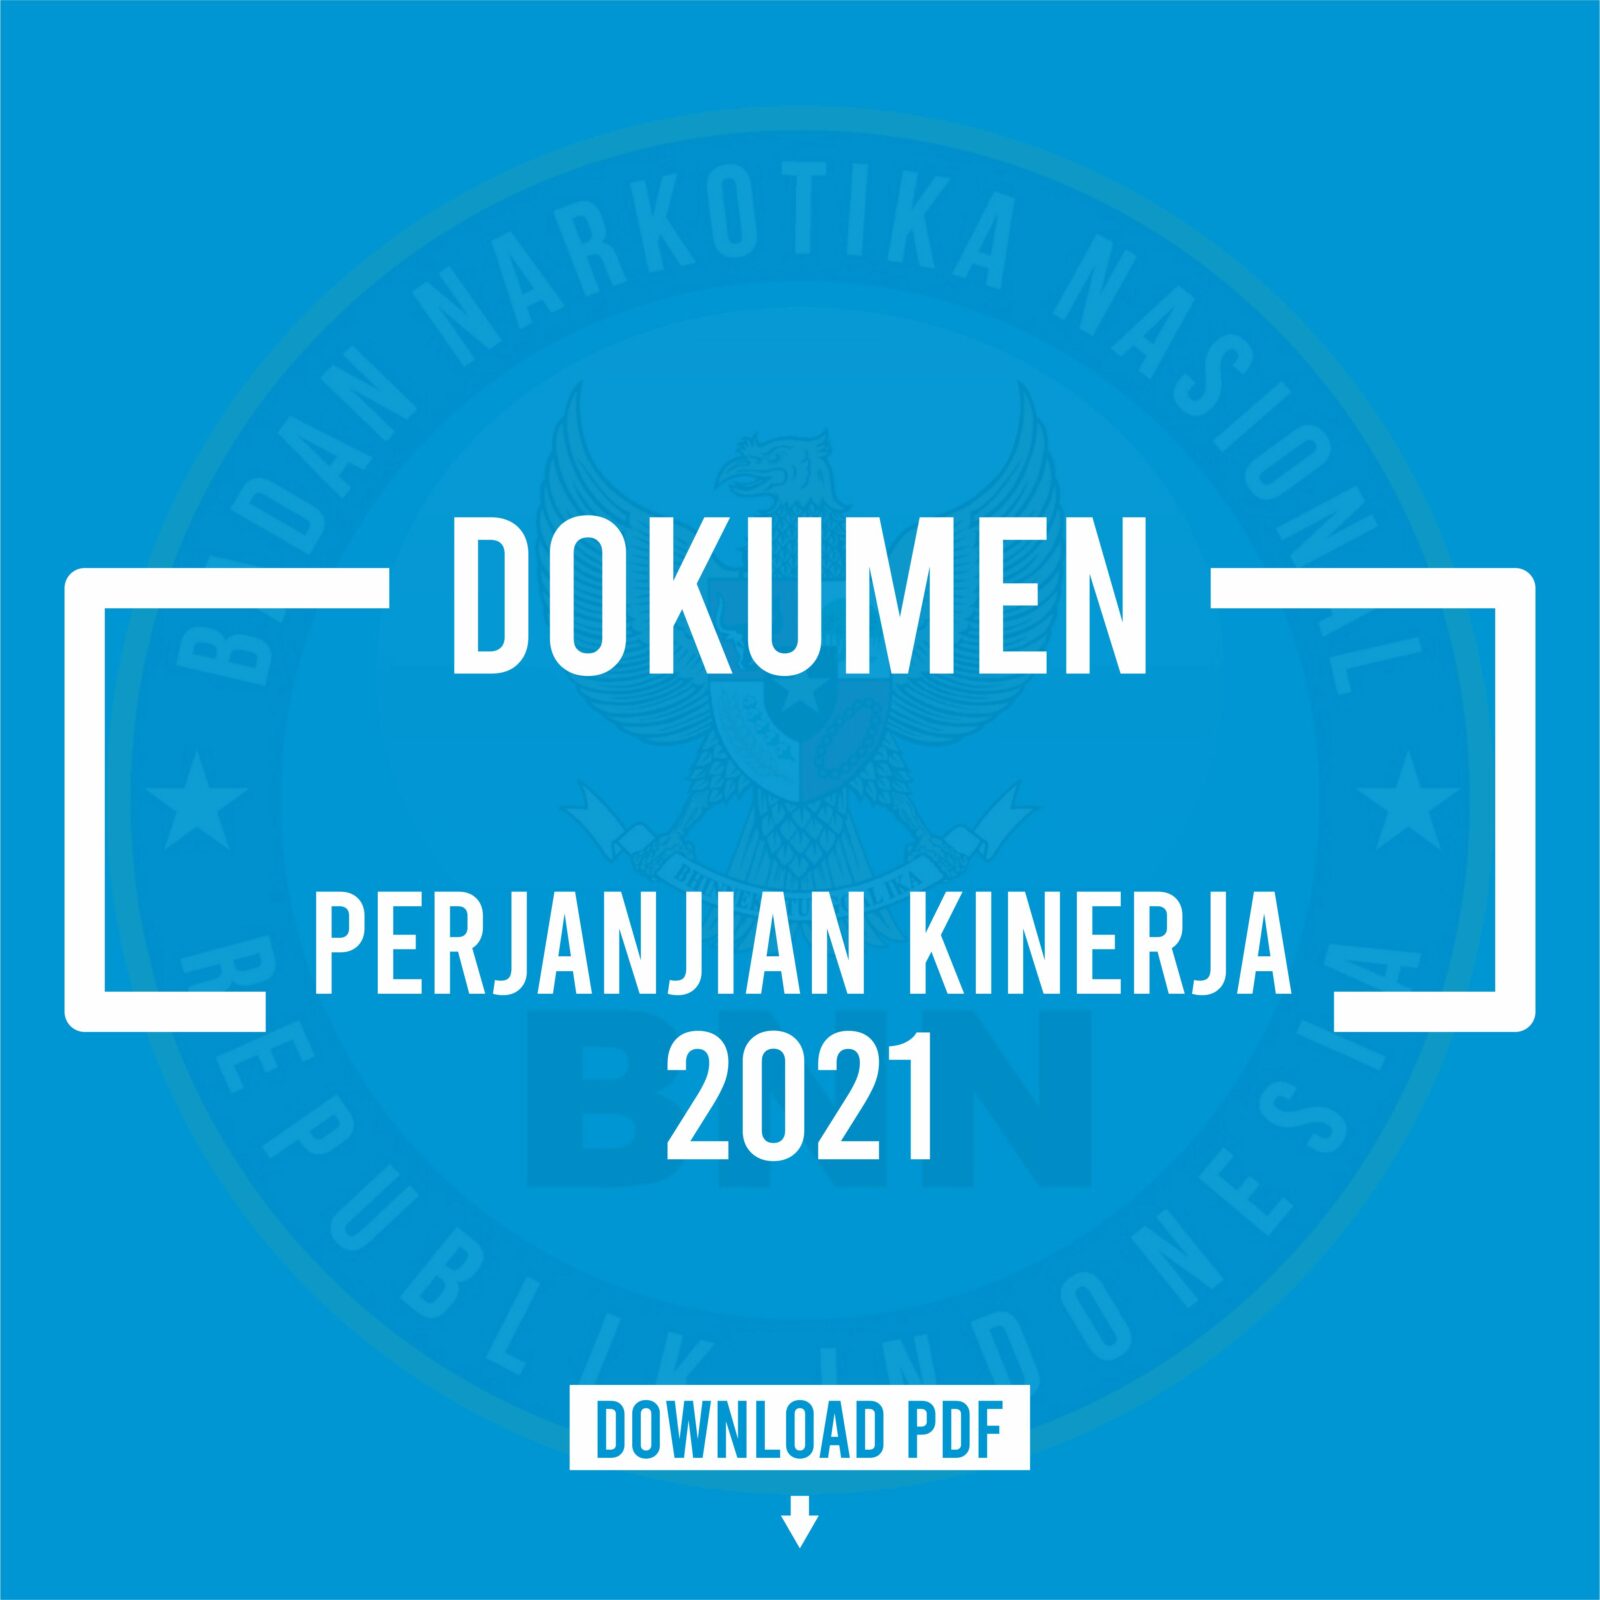 DOKUMEN PK 2021